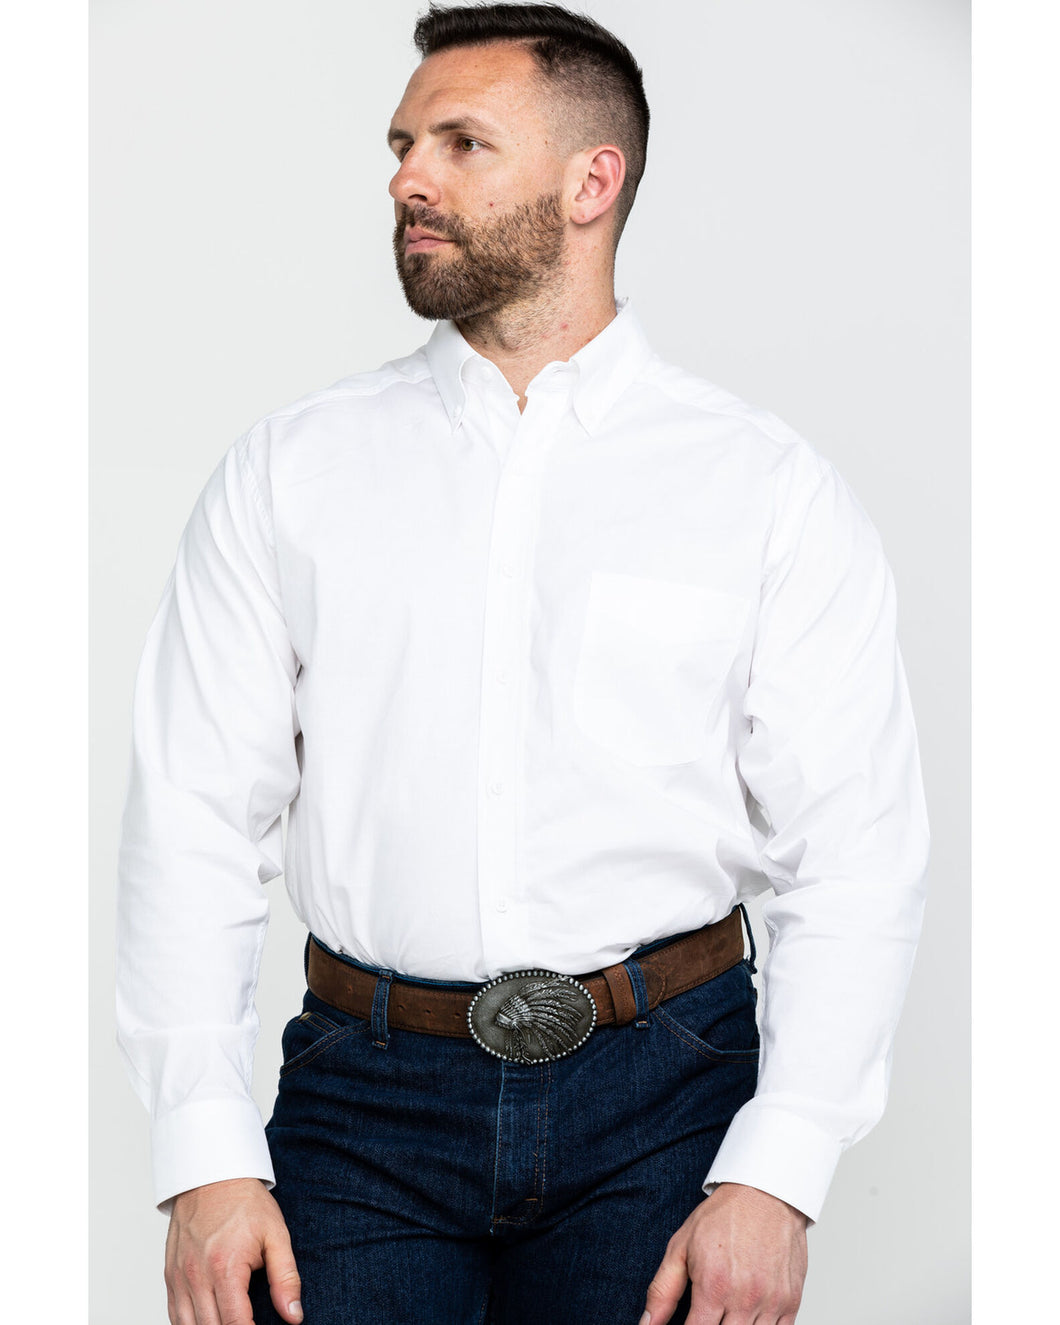 Men's Solid Shirt by Panhandle Slim - Henderson's Western Store